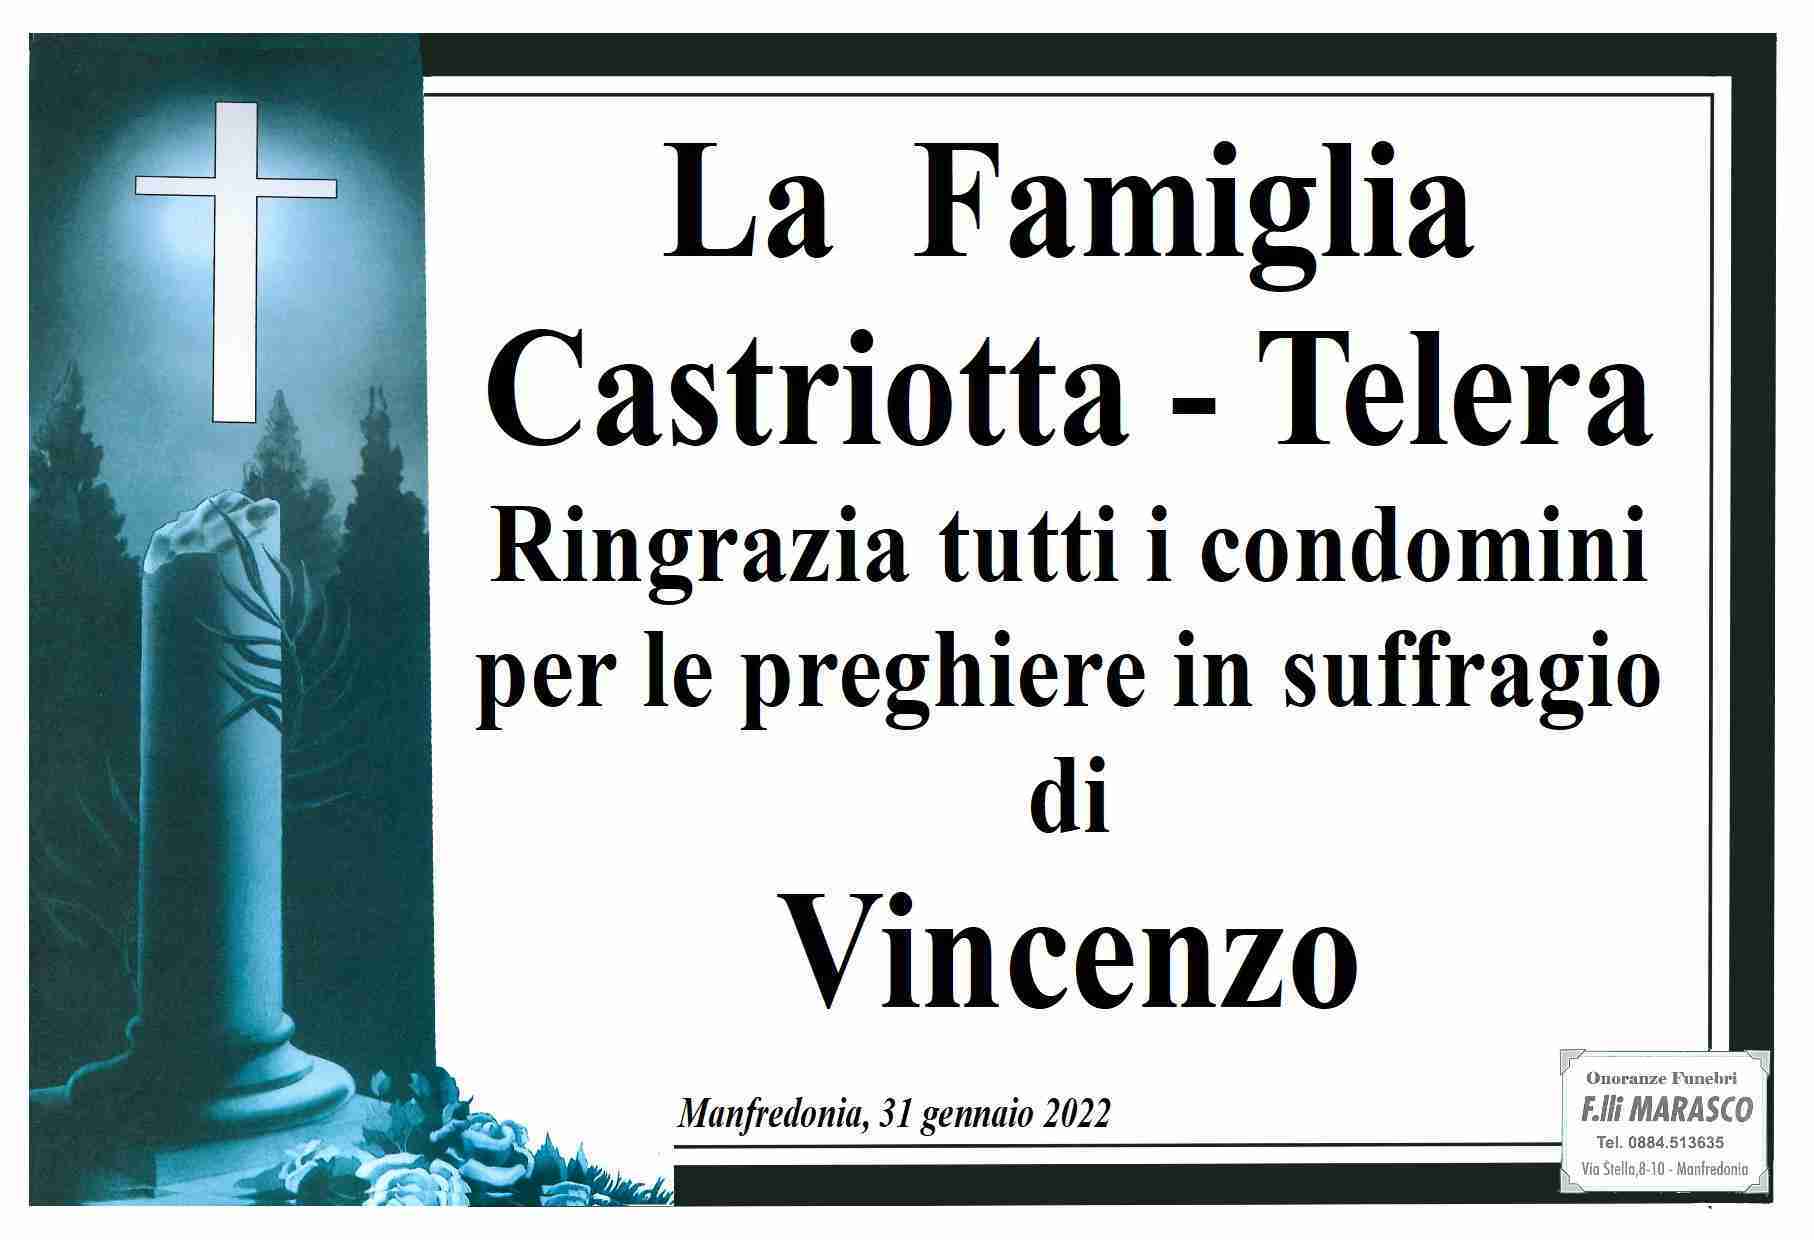 Vincenzo Castriotta